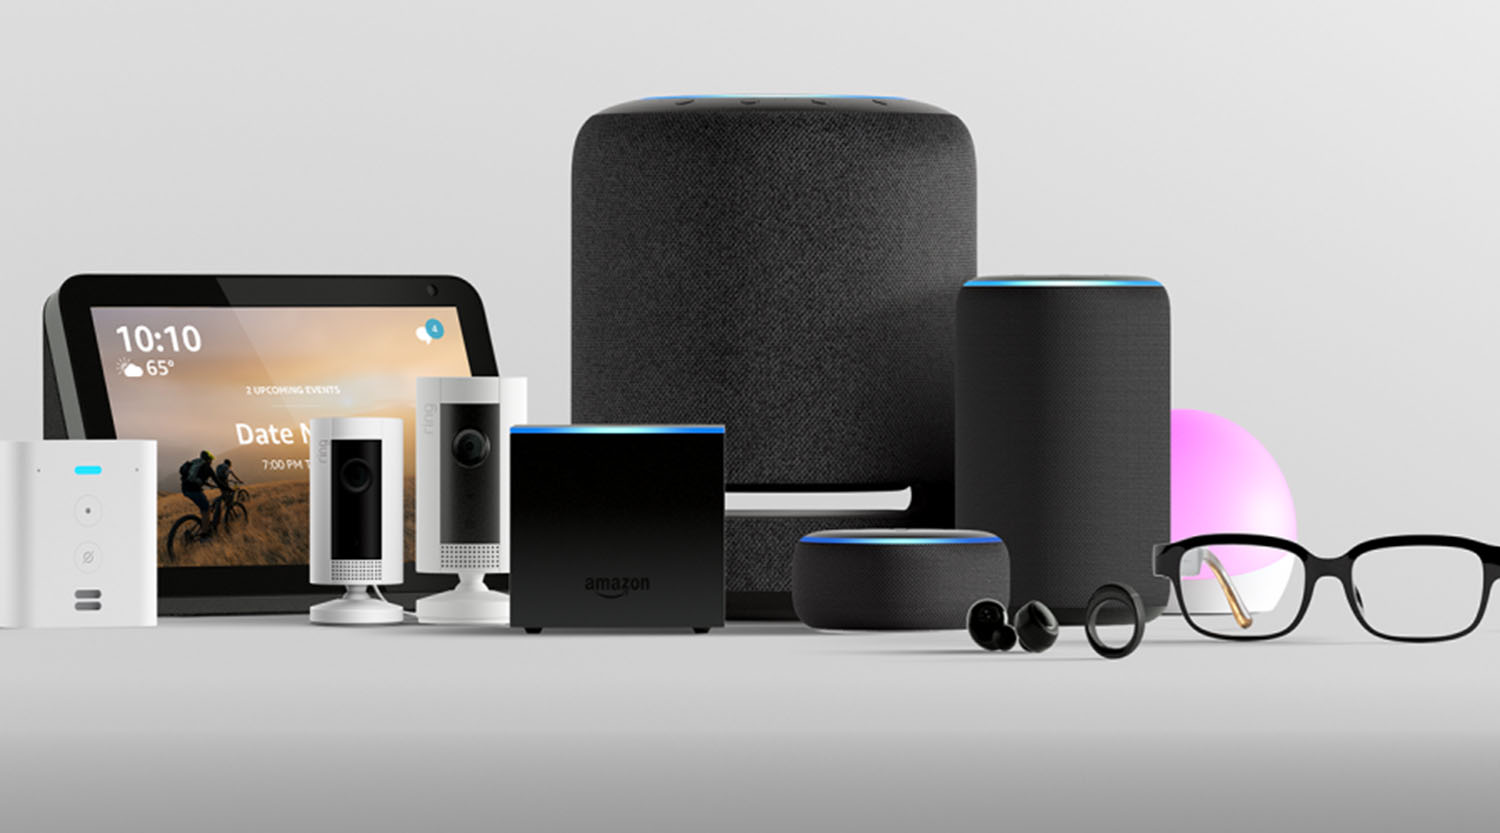 Amazon new Echo products